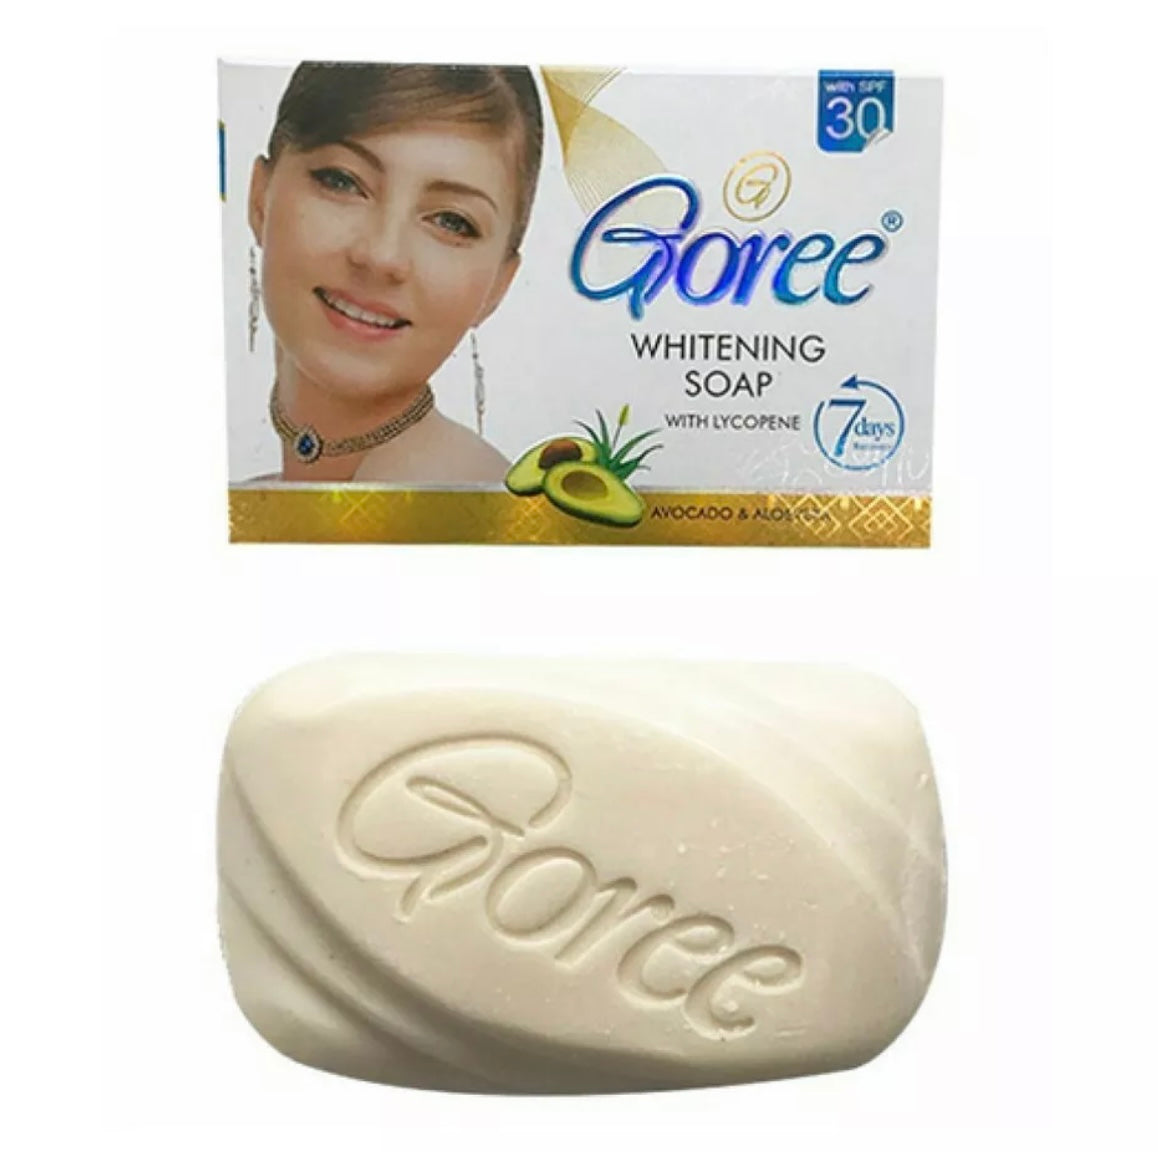 Goree Whitening Soap with Lycopene – My Care Kits